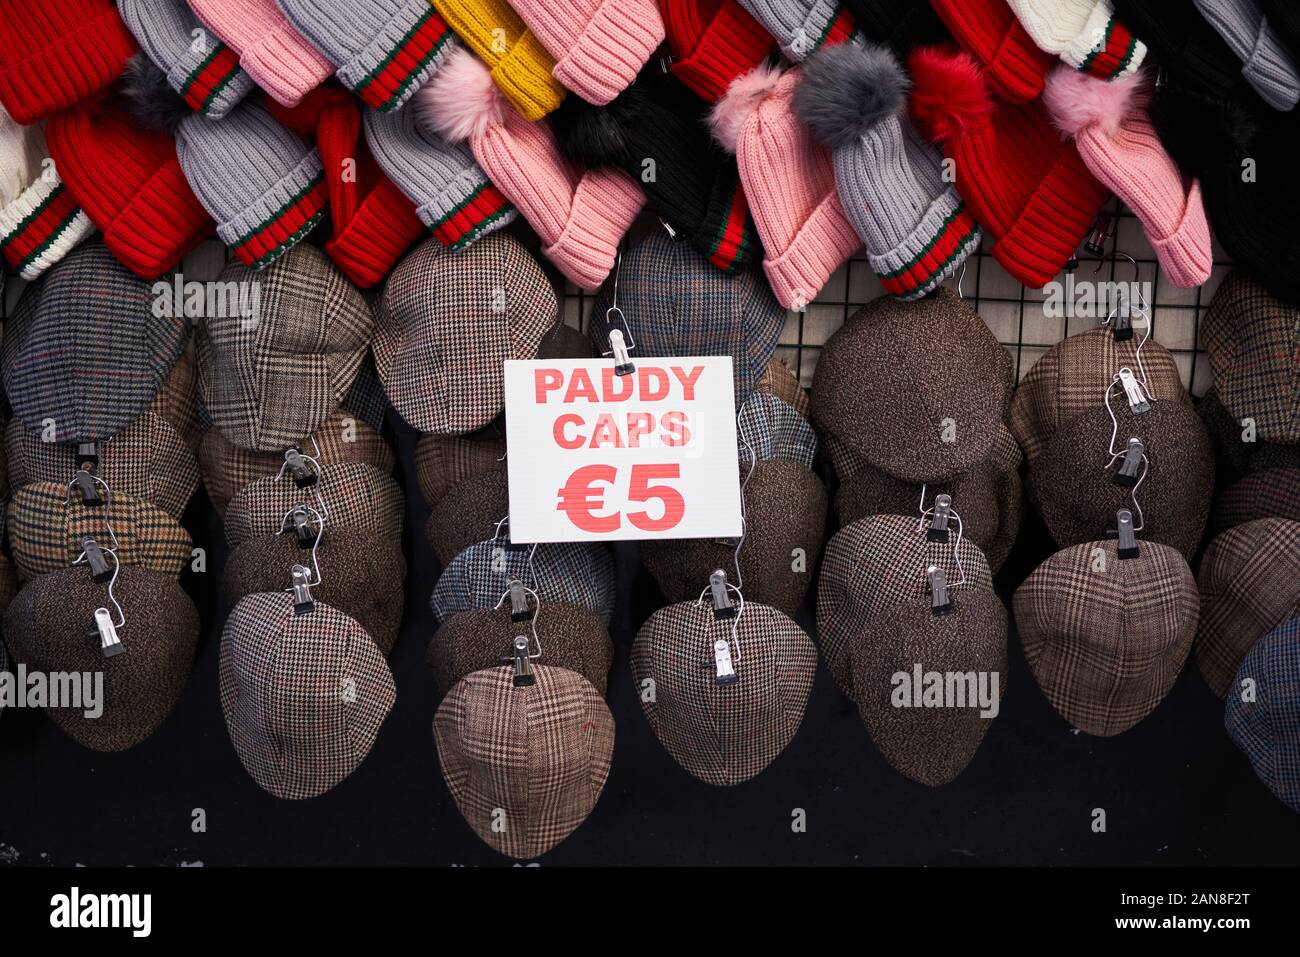 Paddy Caps for sale. Dublin, Ireland. Stock Photo